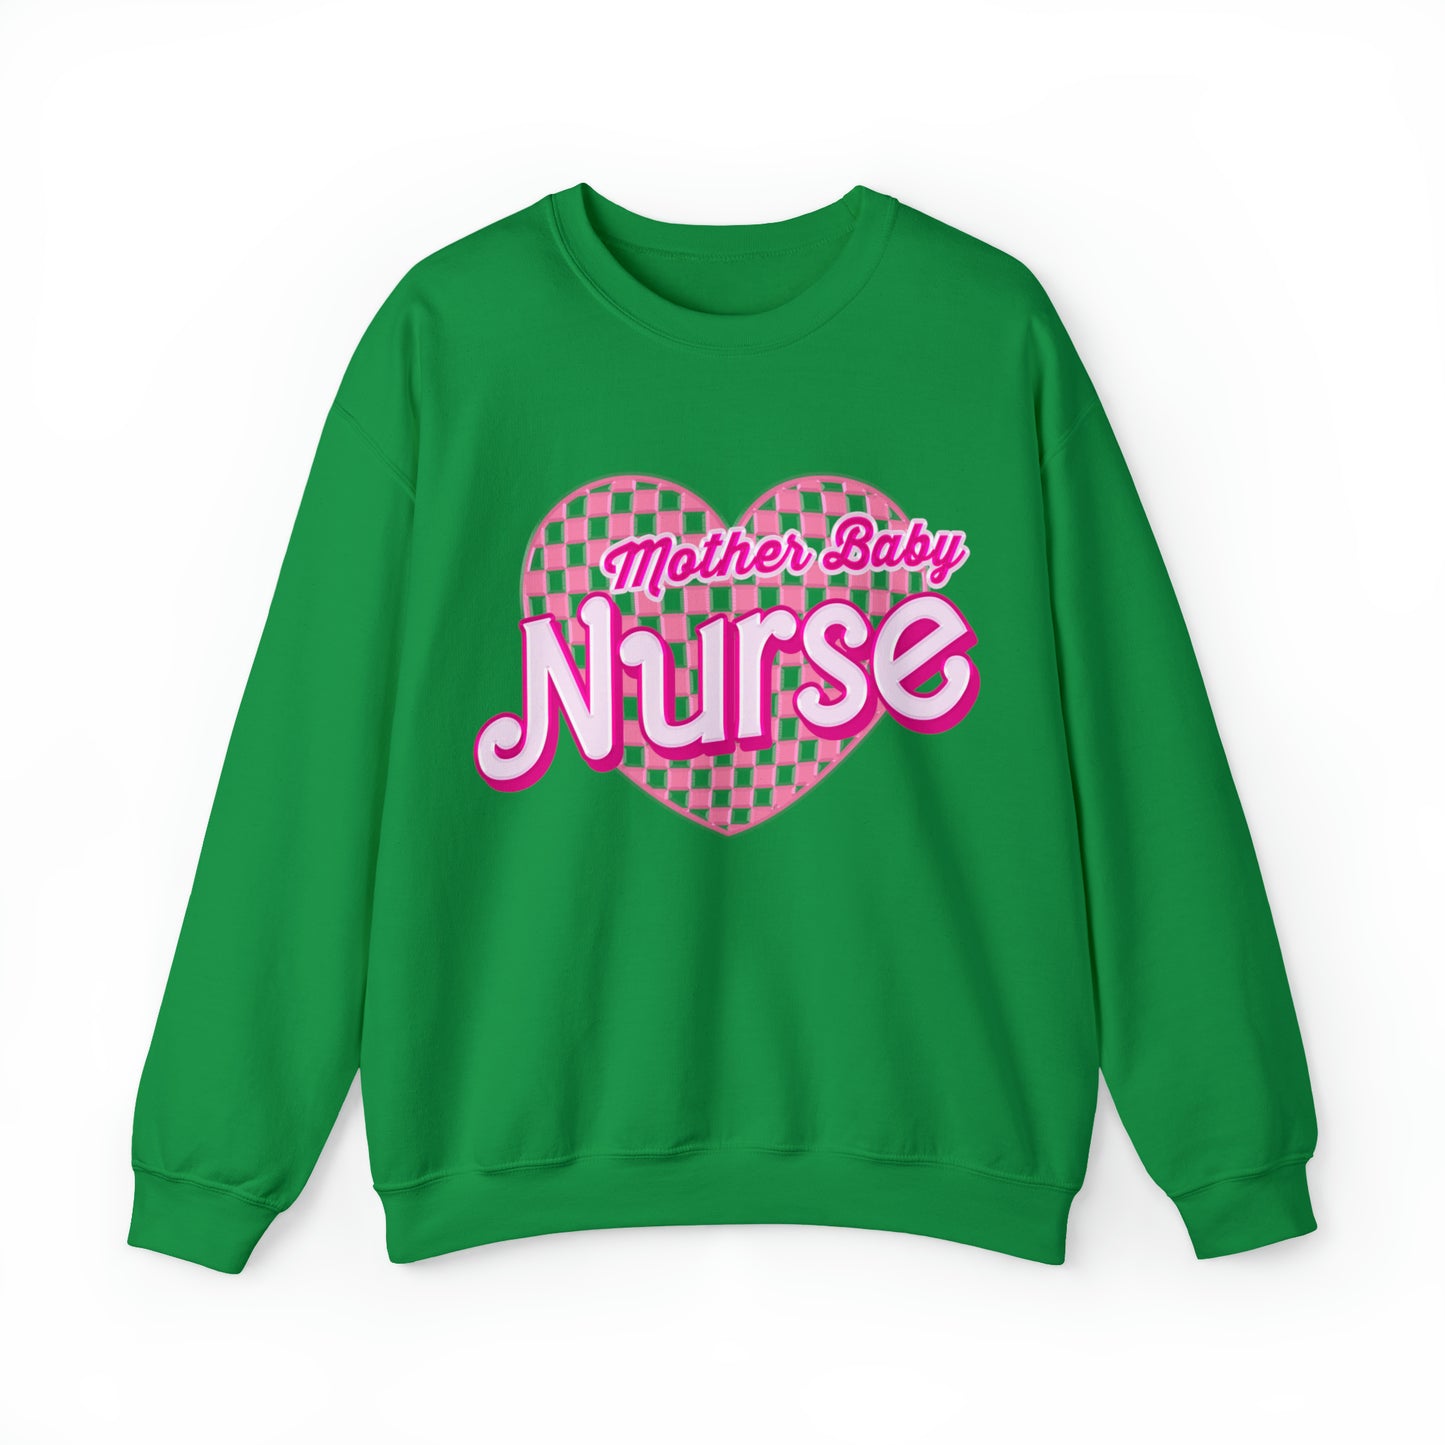 Mother Baby Nurse Sweatshirt, Postpartum Nurse Sweater, Postpartum Nurse Sweatshirts, MBU Nurse Christmas Gifts, S946